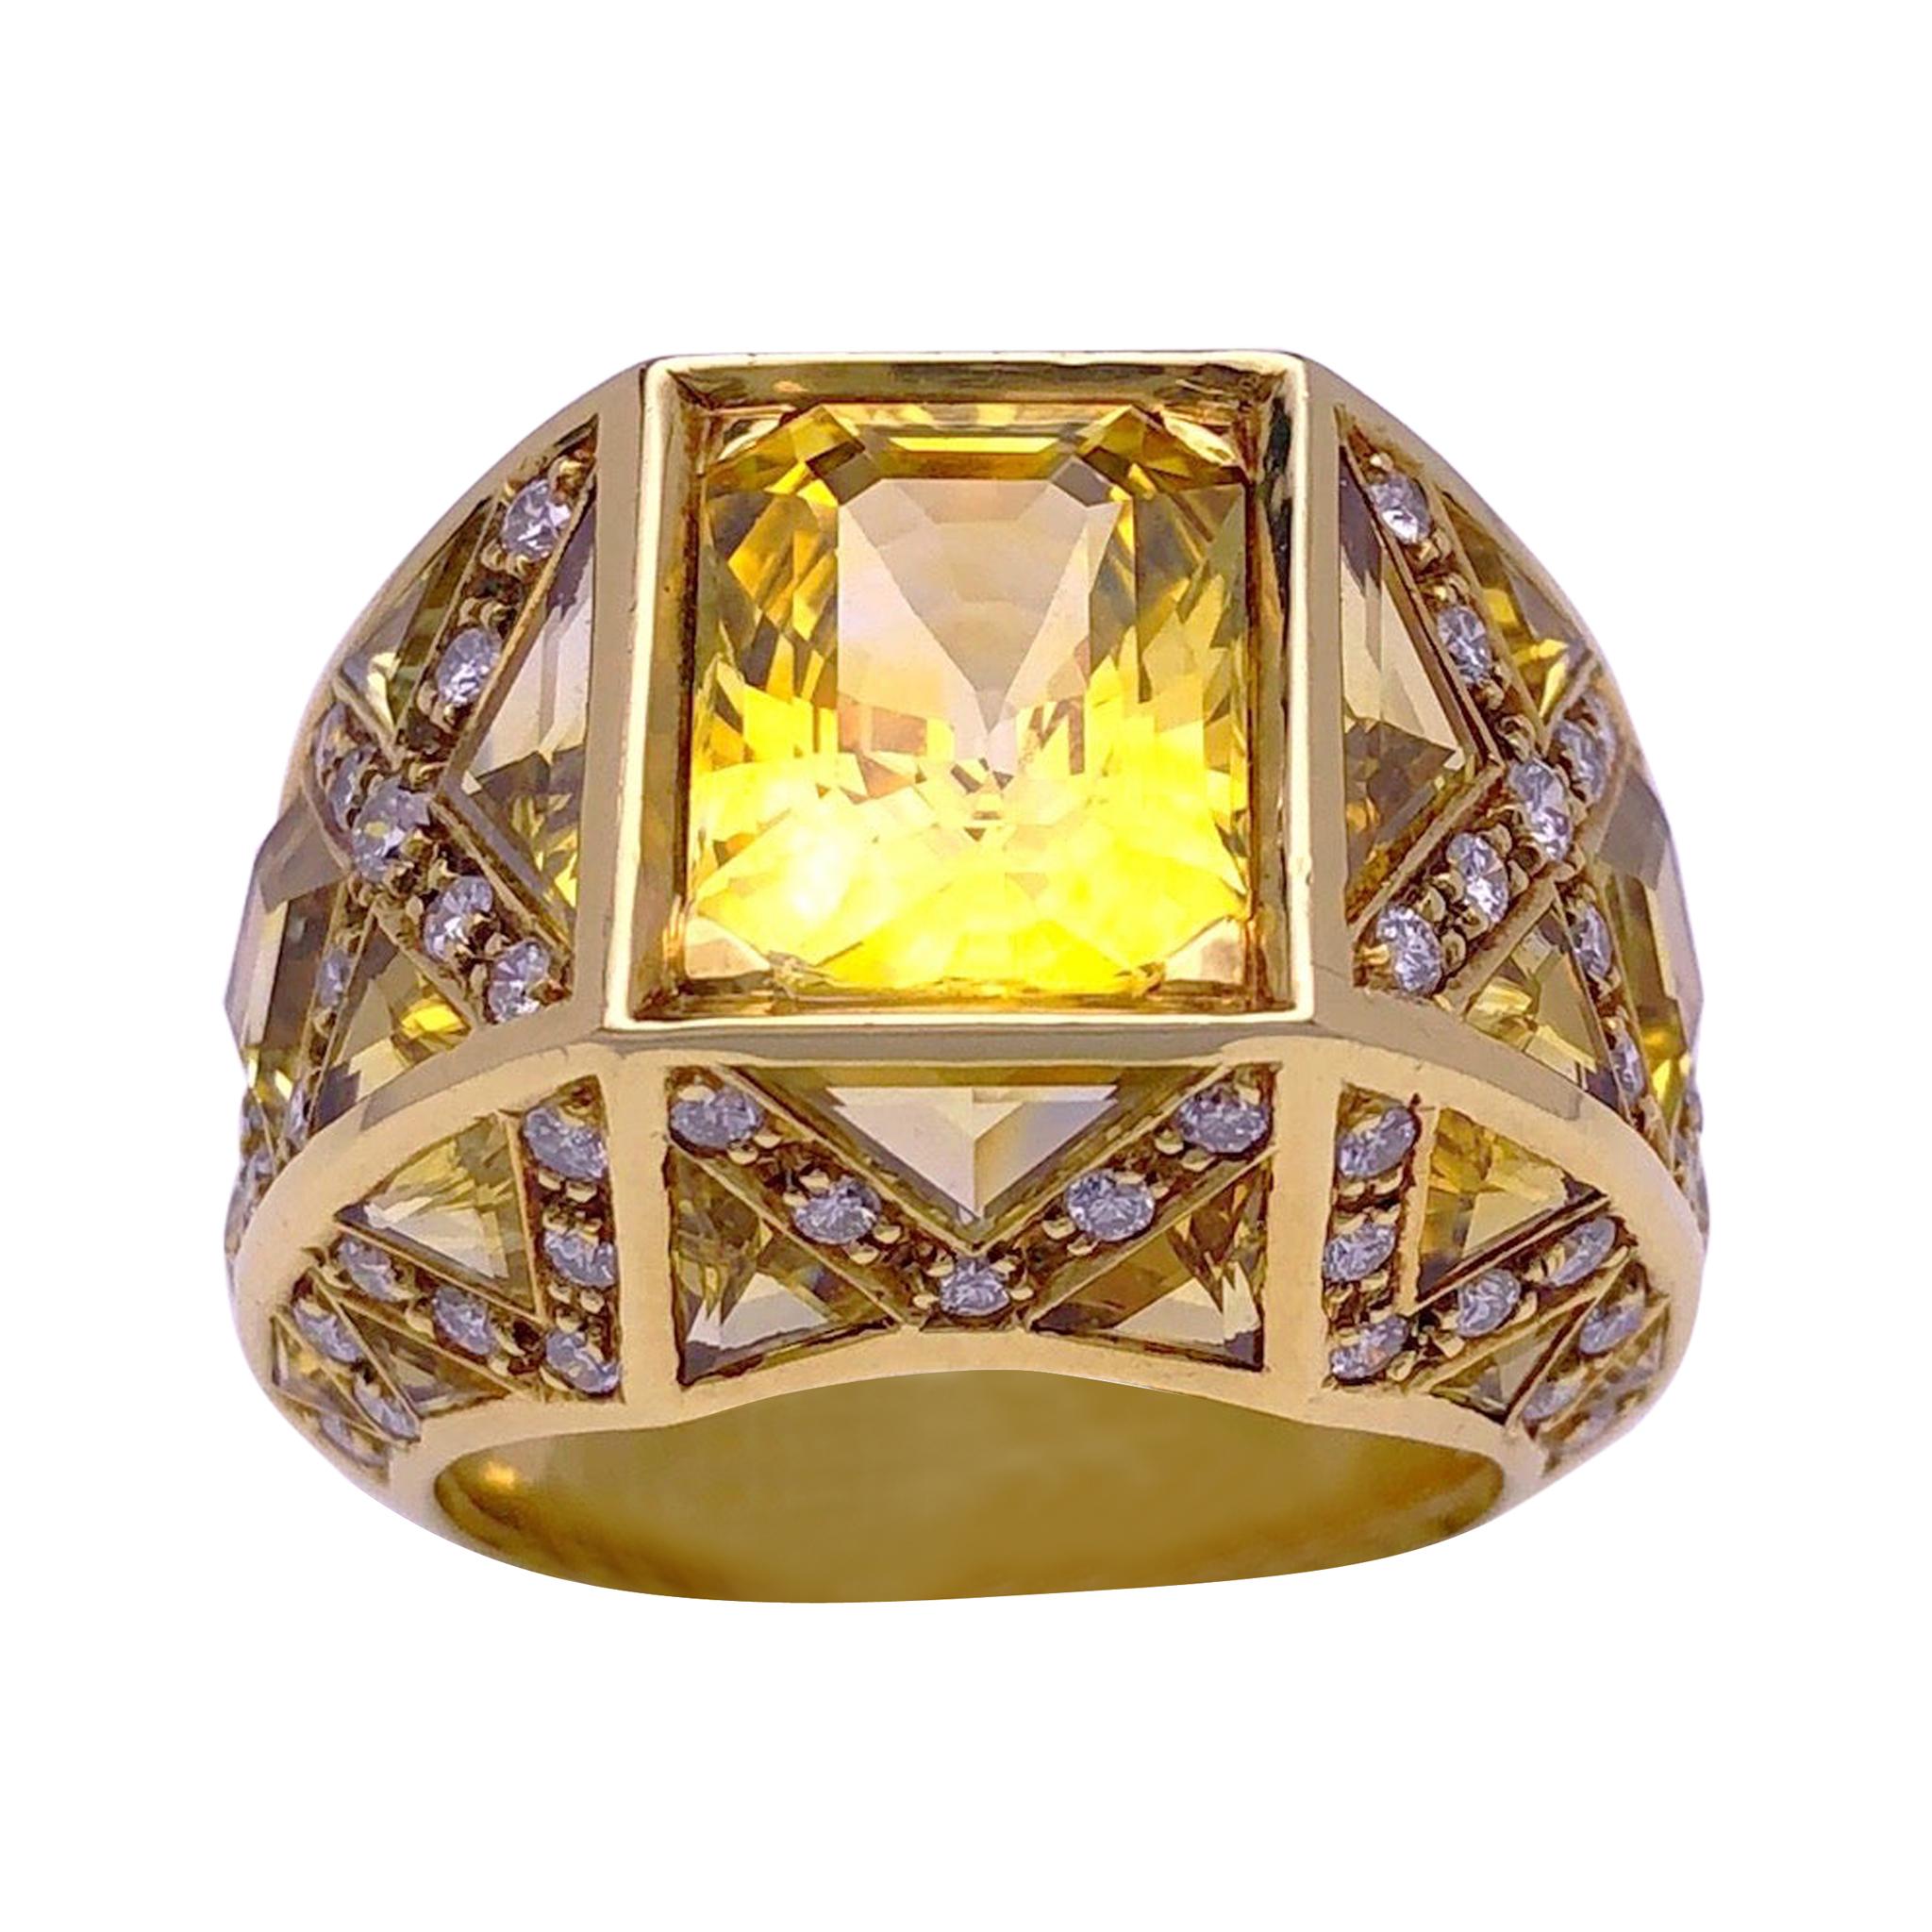 Rodney Rayner Bague en or 18 carats avec saphirs jaunes de 9,27 carats et diamants de 0,85 carat